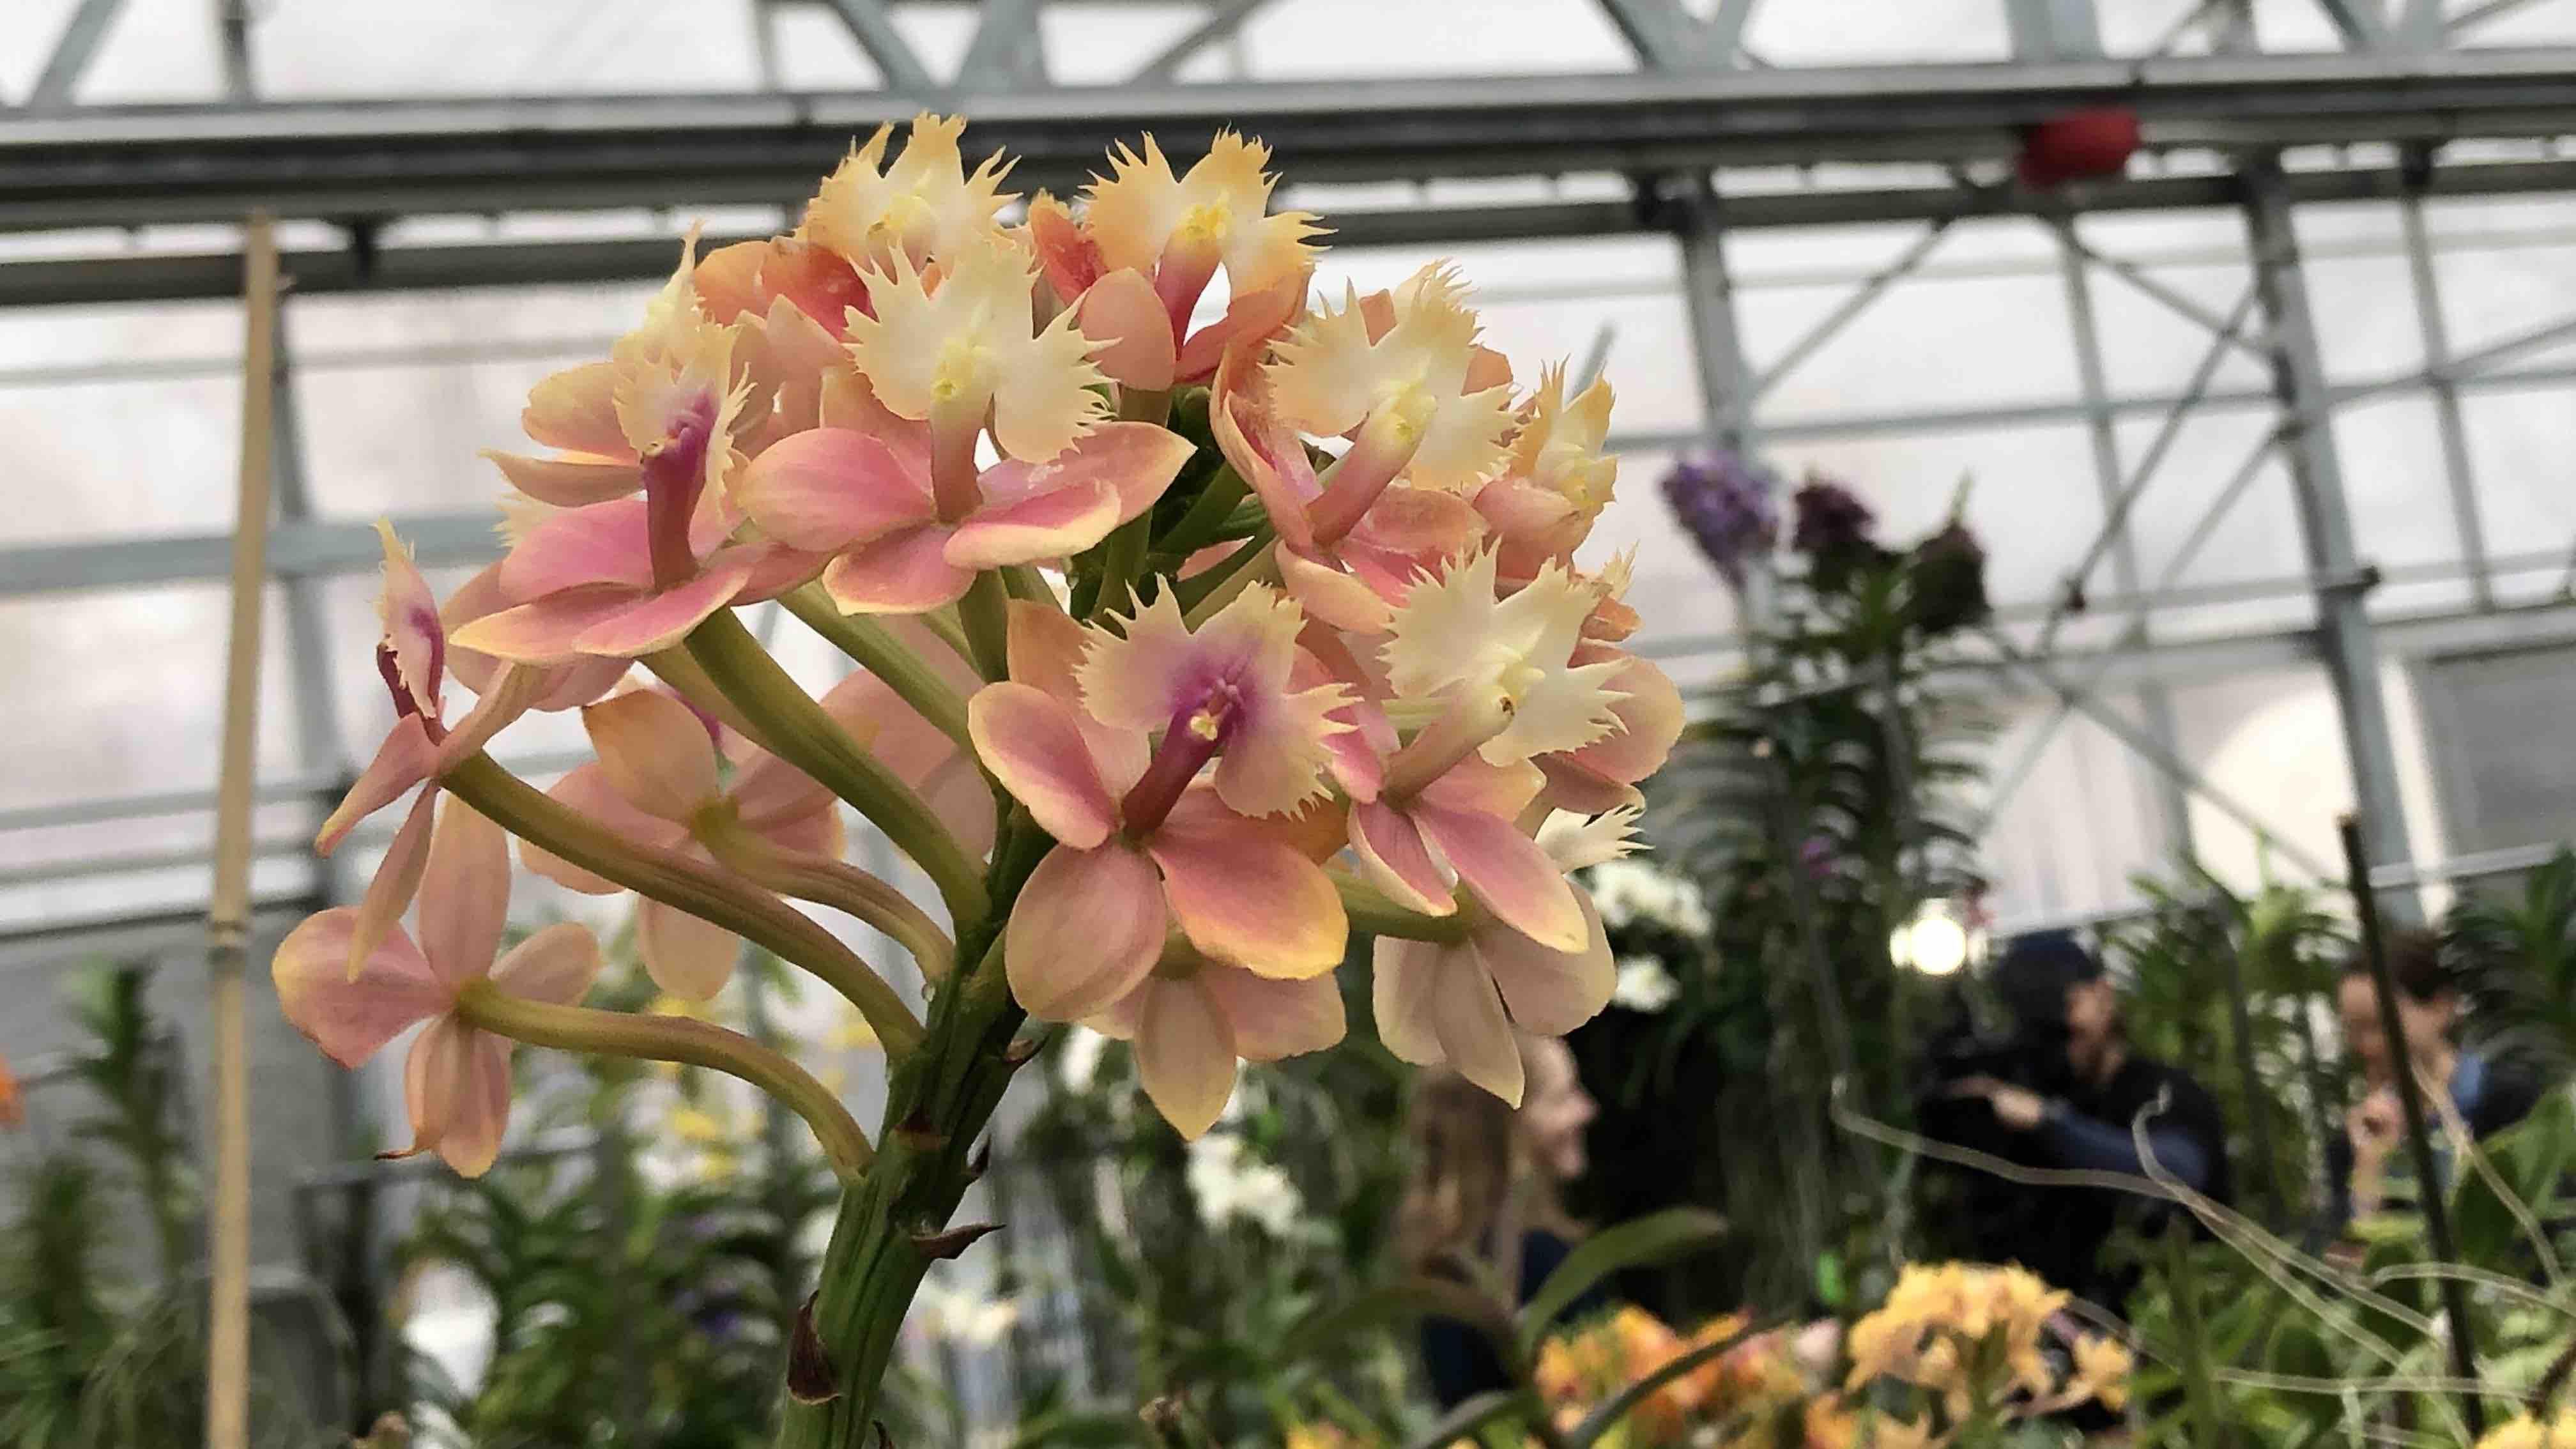 The Orchidarium is one Chicago Botanic Garden's 26 greenhouses. (Patty Wetli / WTTW News)